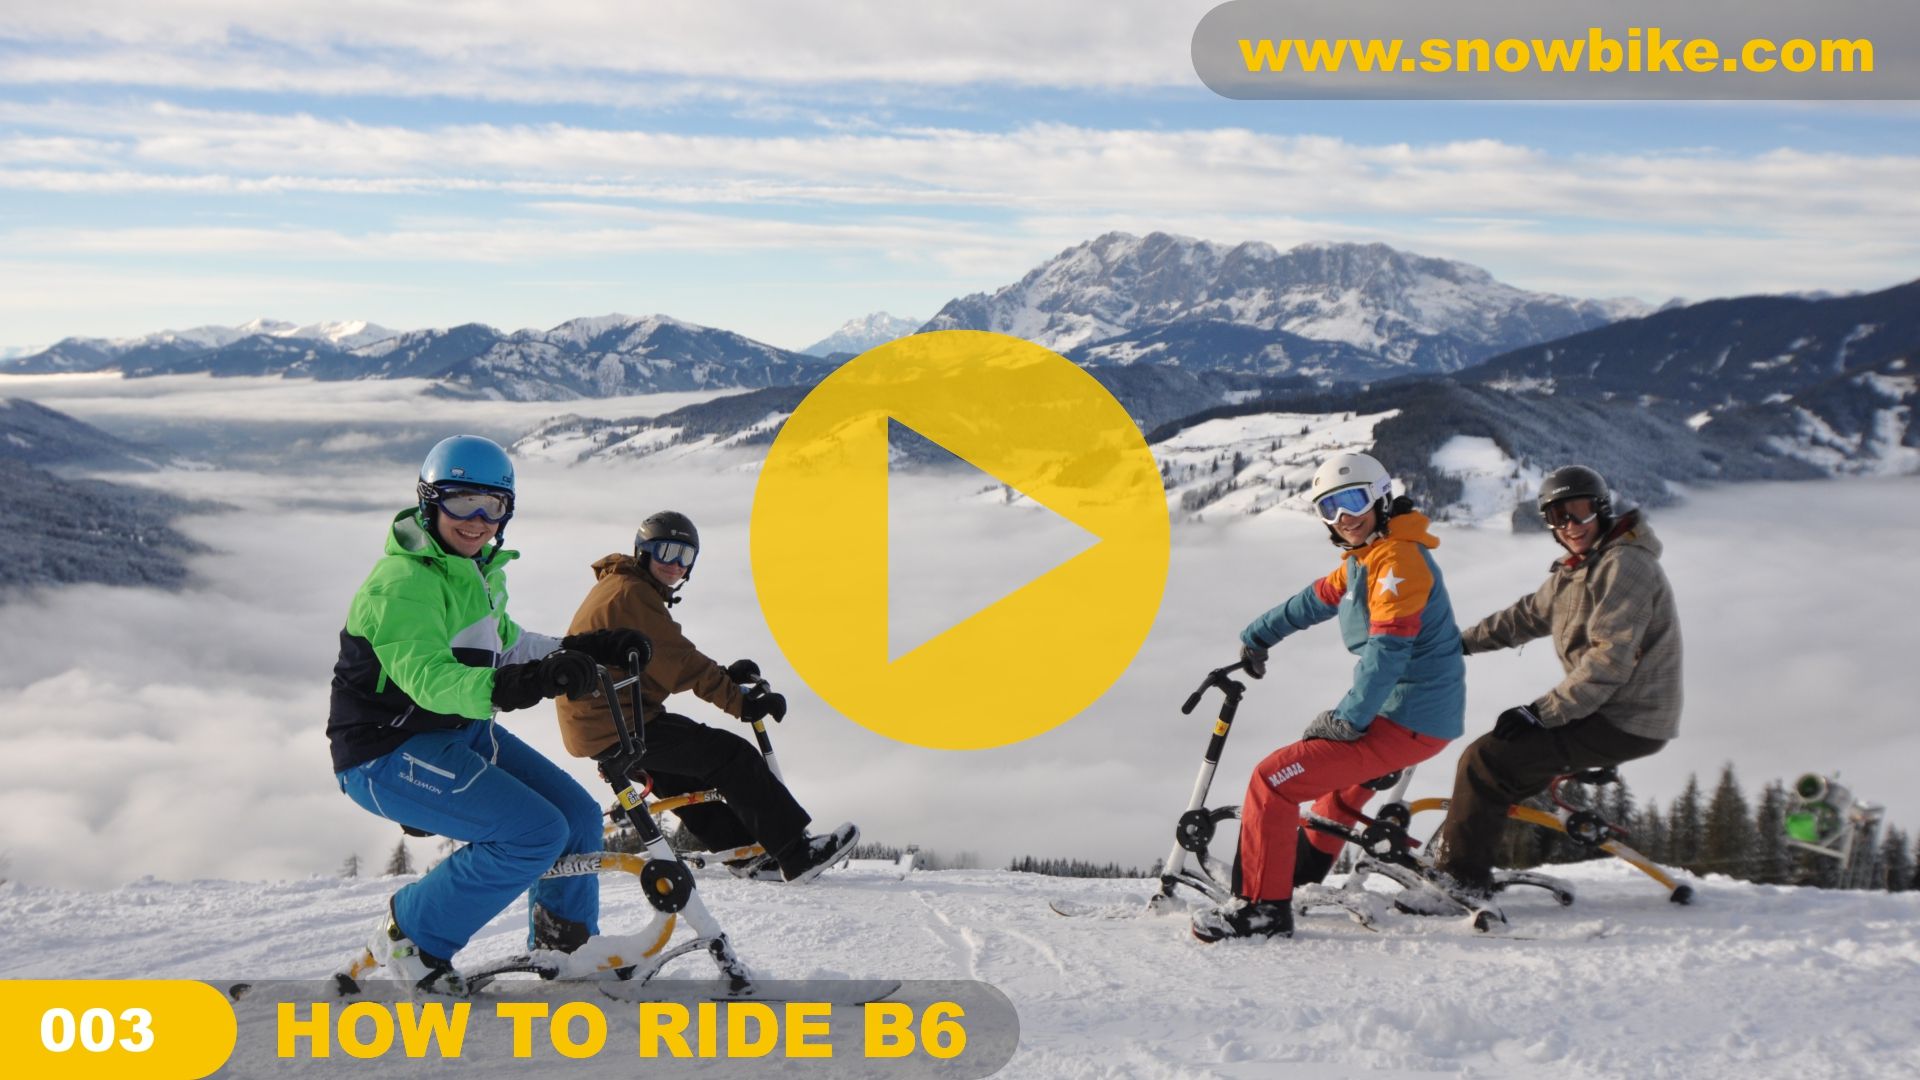 snowbike-basics-how-to-ride-b6-coverA006BD81-9790-677E-C78F-00C0A6C7EC59.jpg